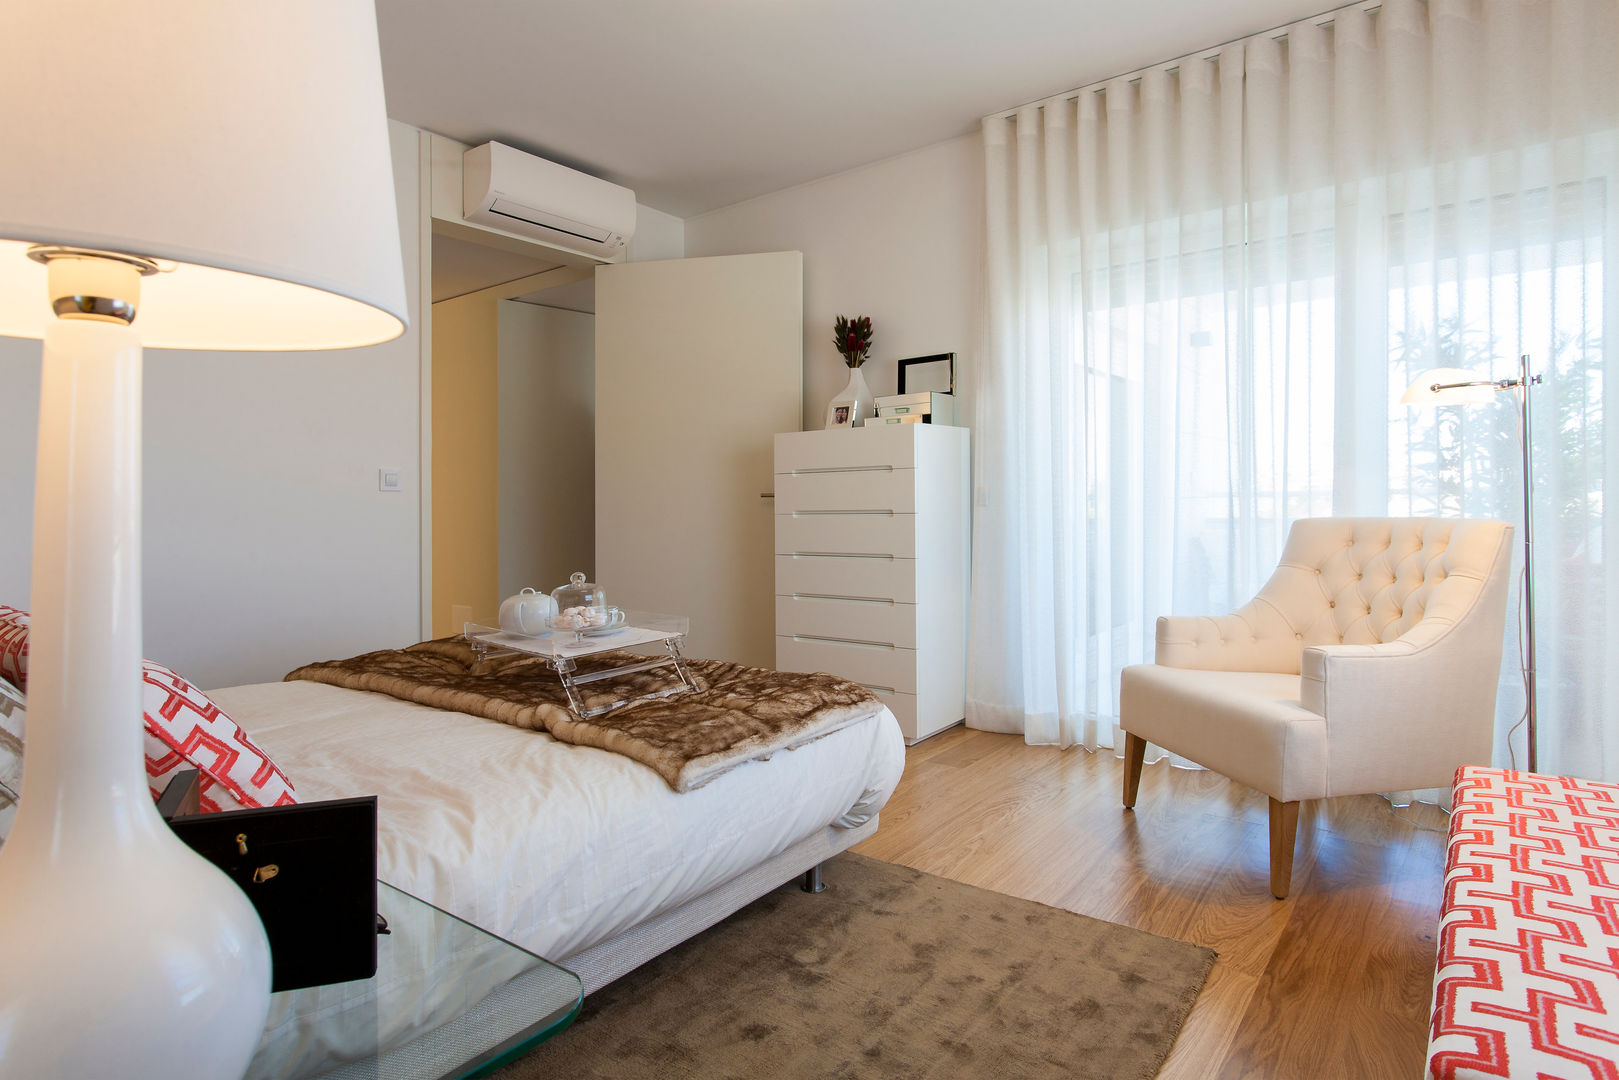 Andar Modelo - Oeiras, Traço Magenta - Design de Interiores Traço Magenta - Design de Interiores Modern style bedroom